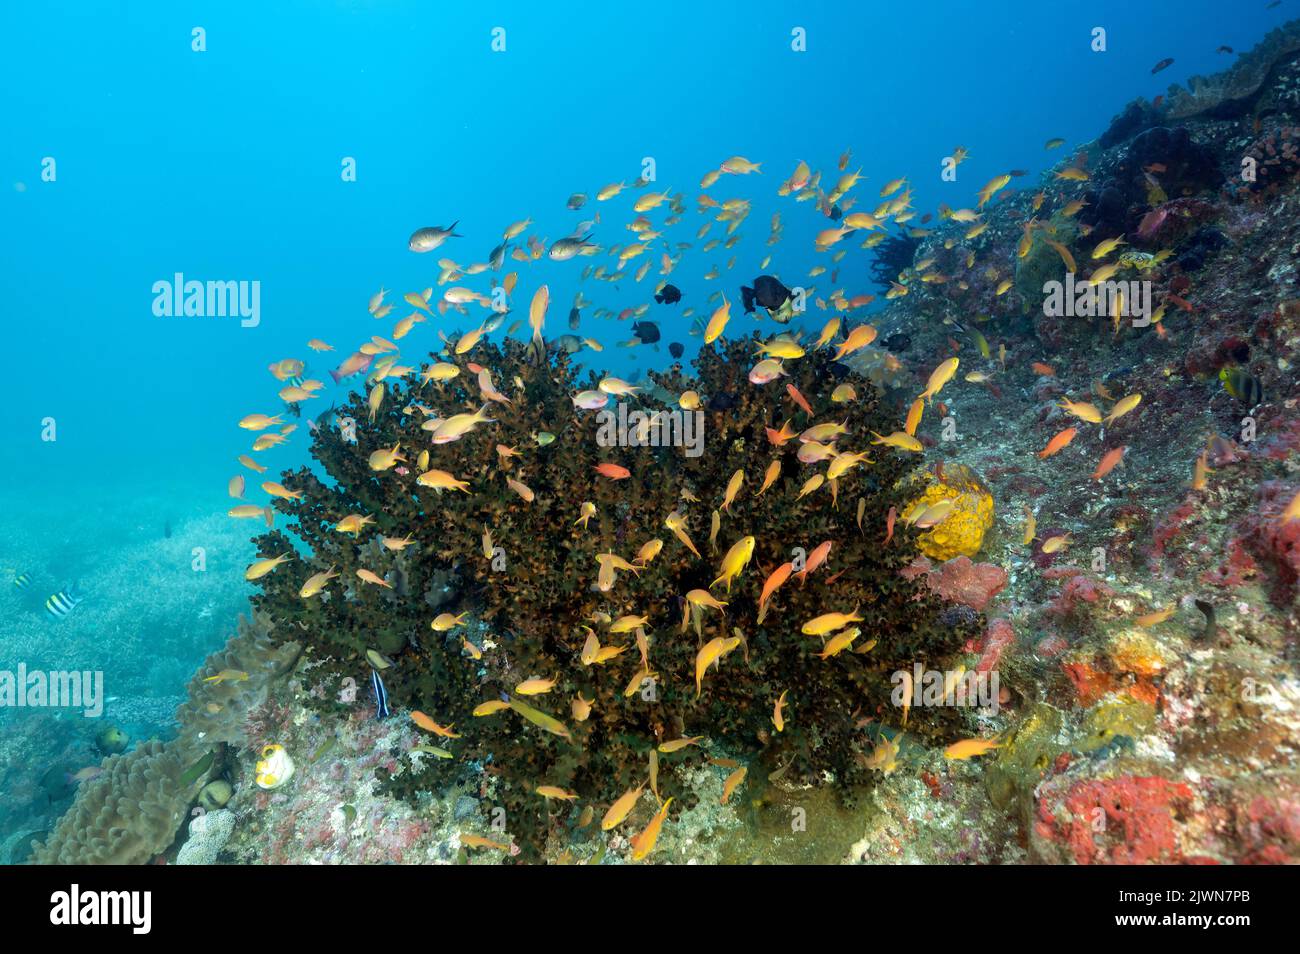 Reef scenic with anthias Raja Ampat Indonesia Stock Photo